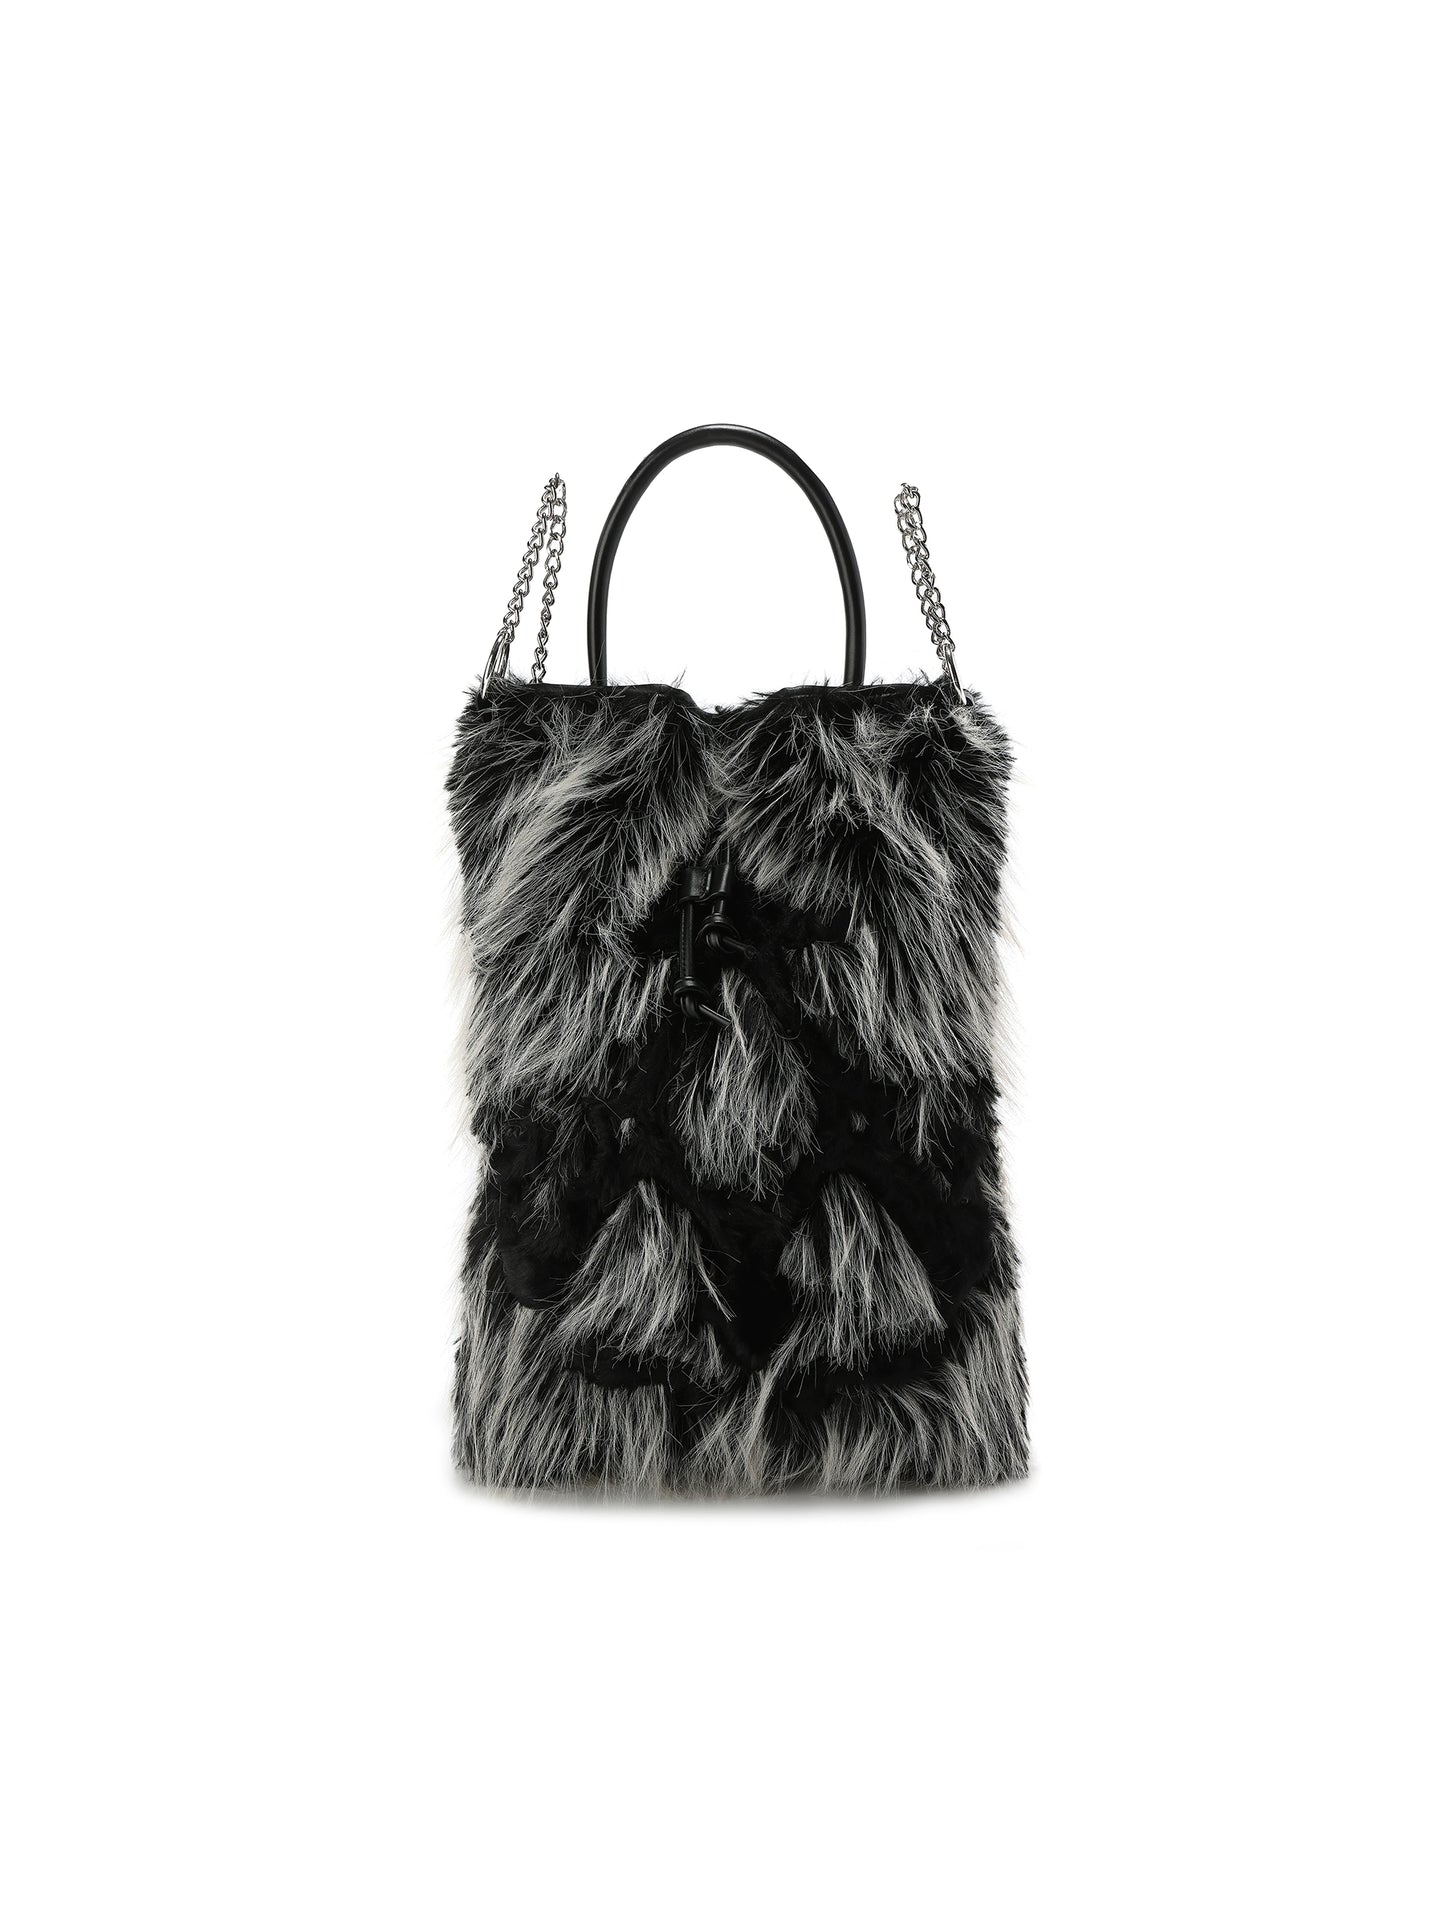 Fur Chain Backpack (이 제품은 세련된 겨울 배낭의 문제를 해결합니다)